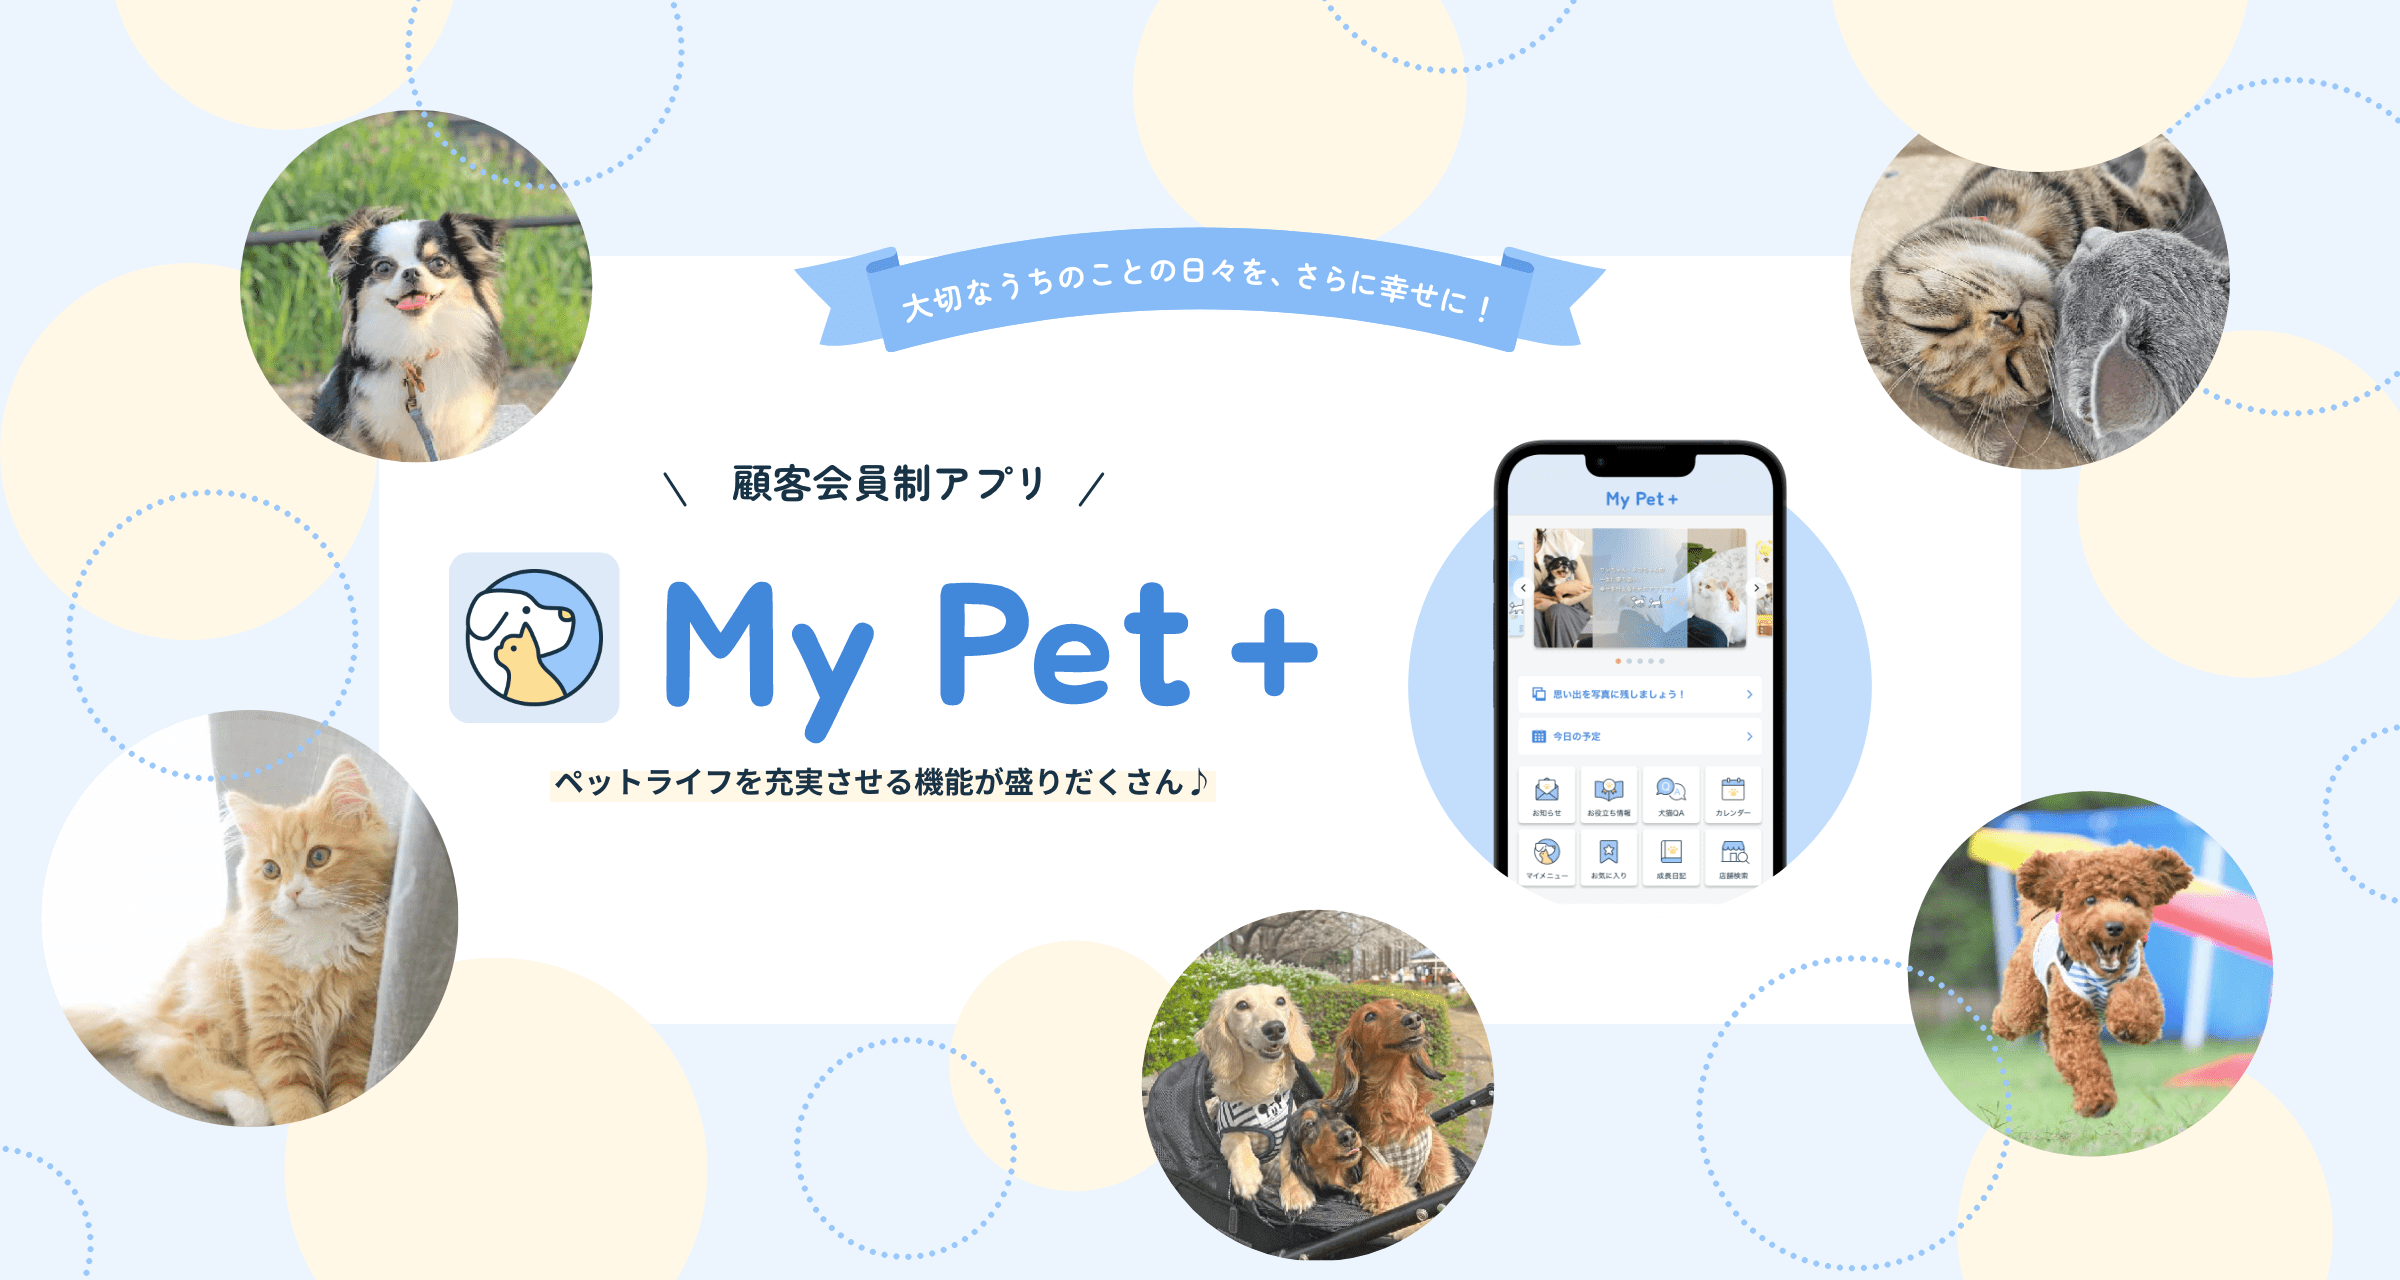 My Pet+